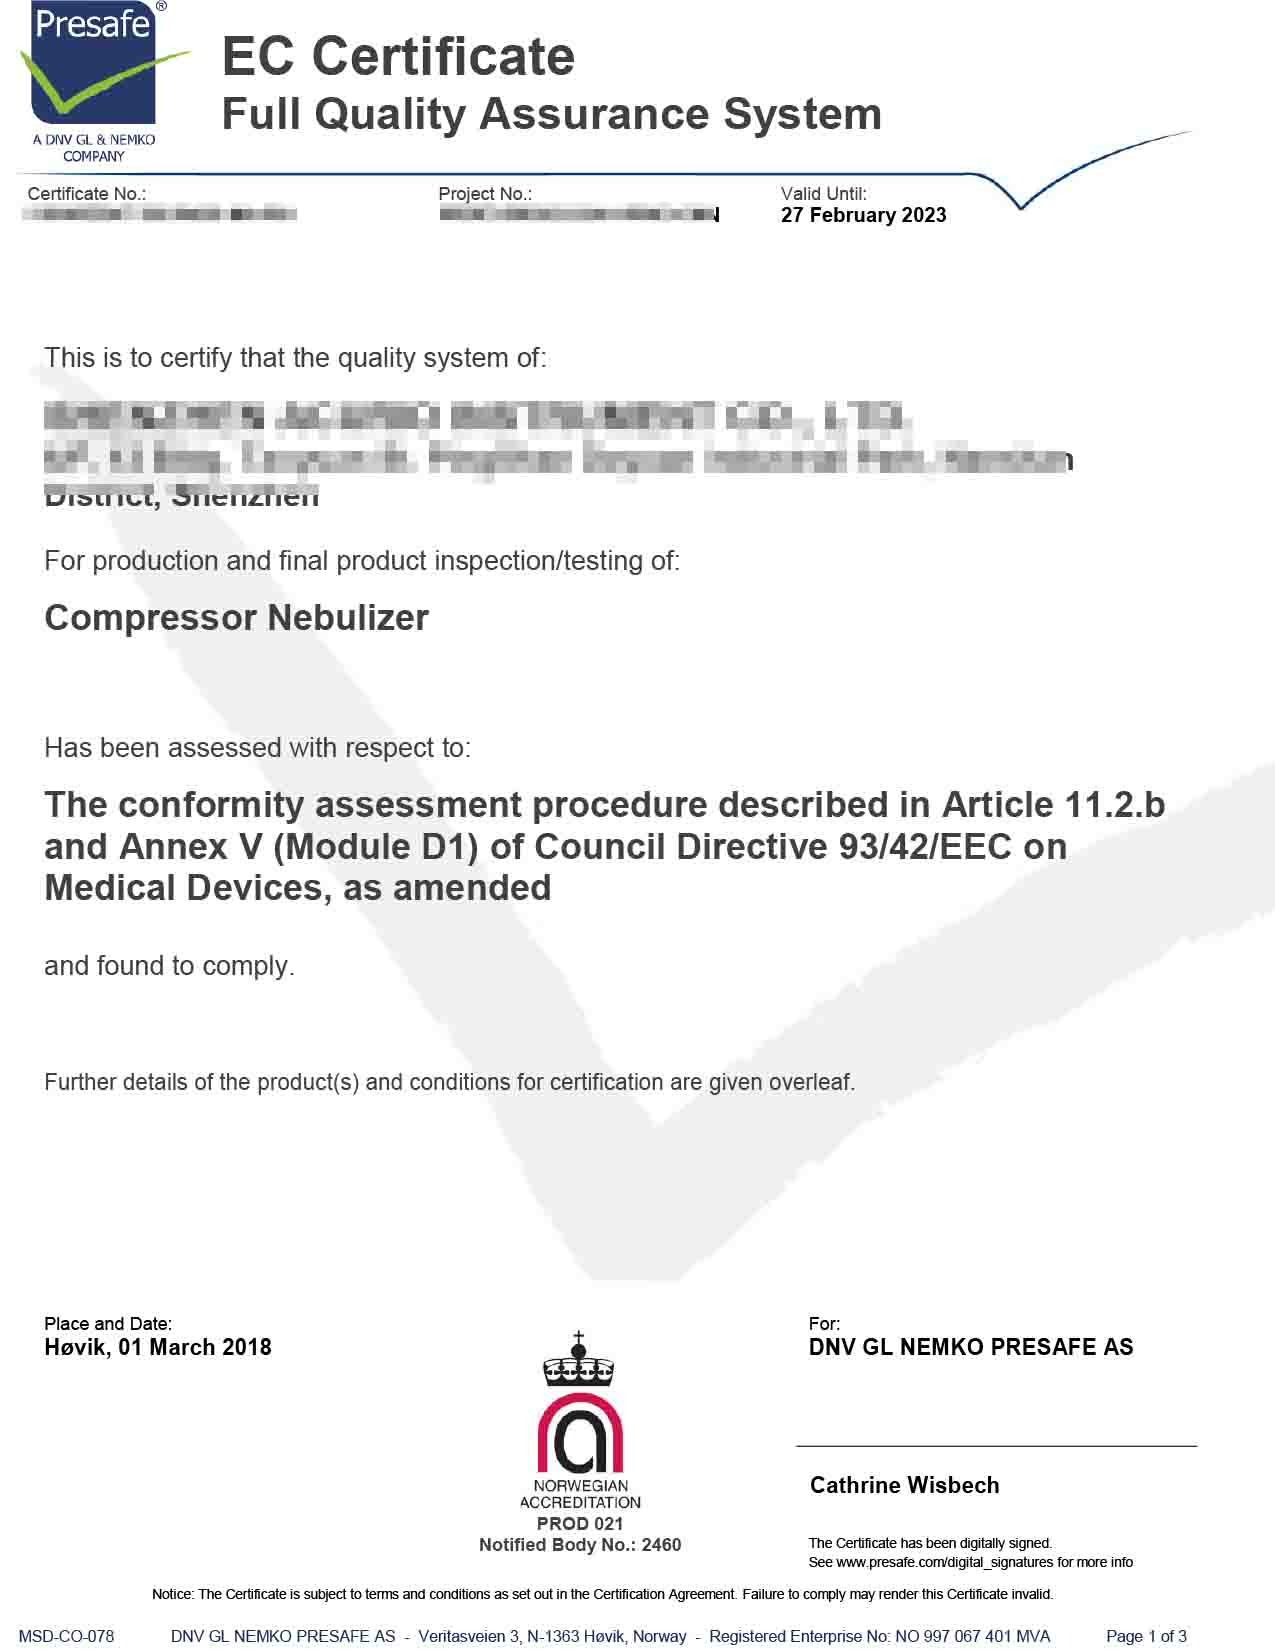 CE-Certificates-for-Compressor-Nebulizers